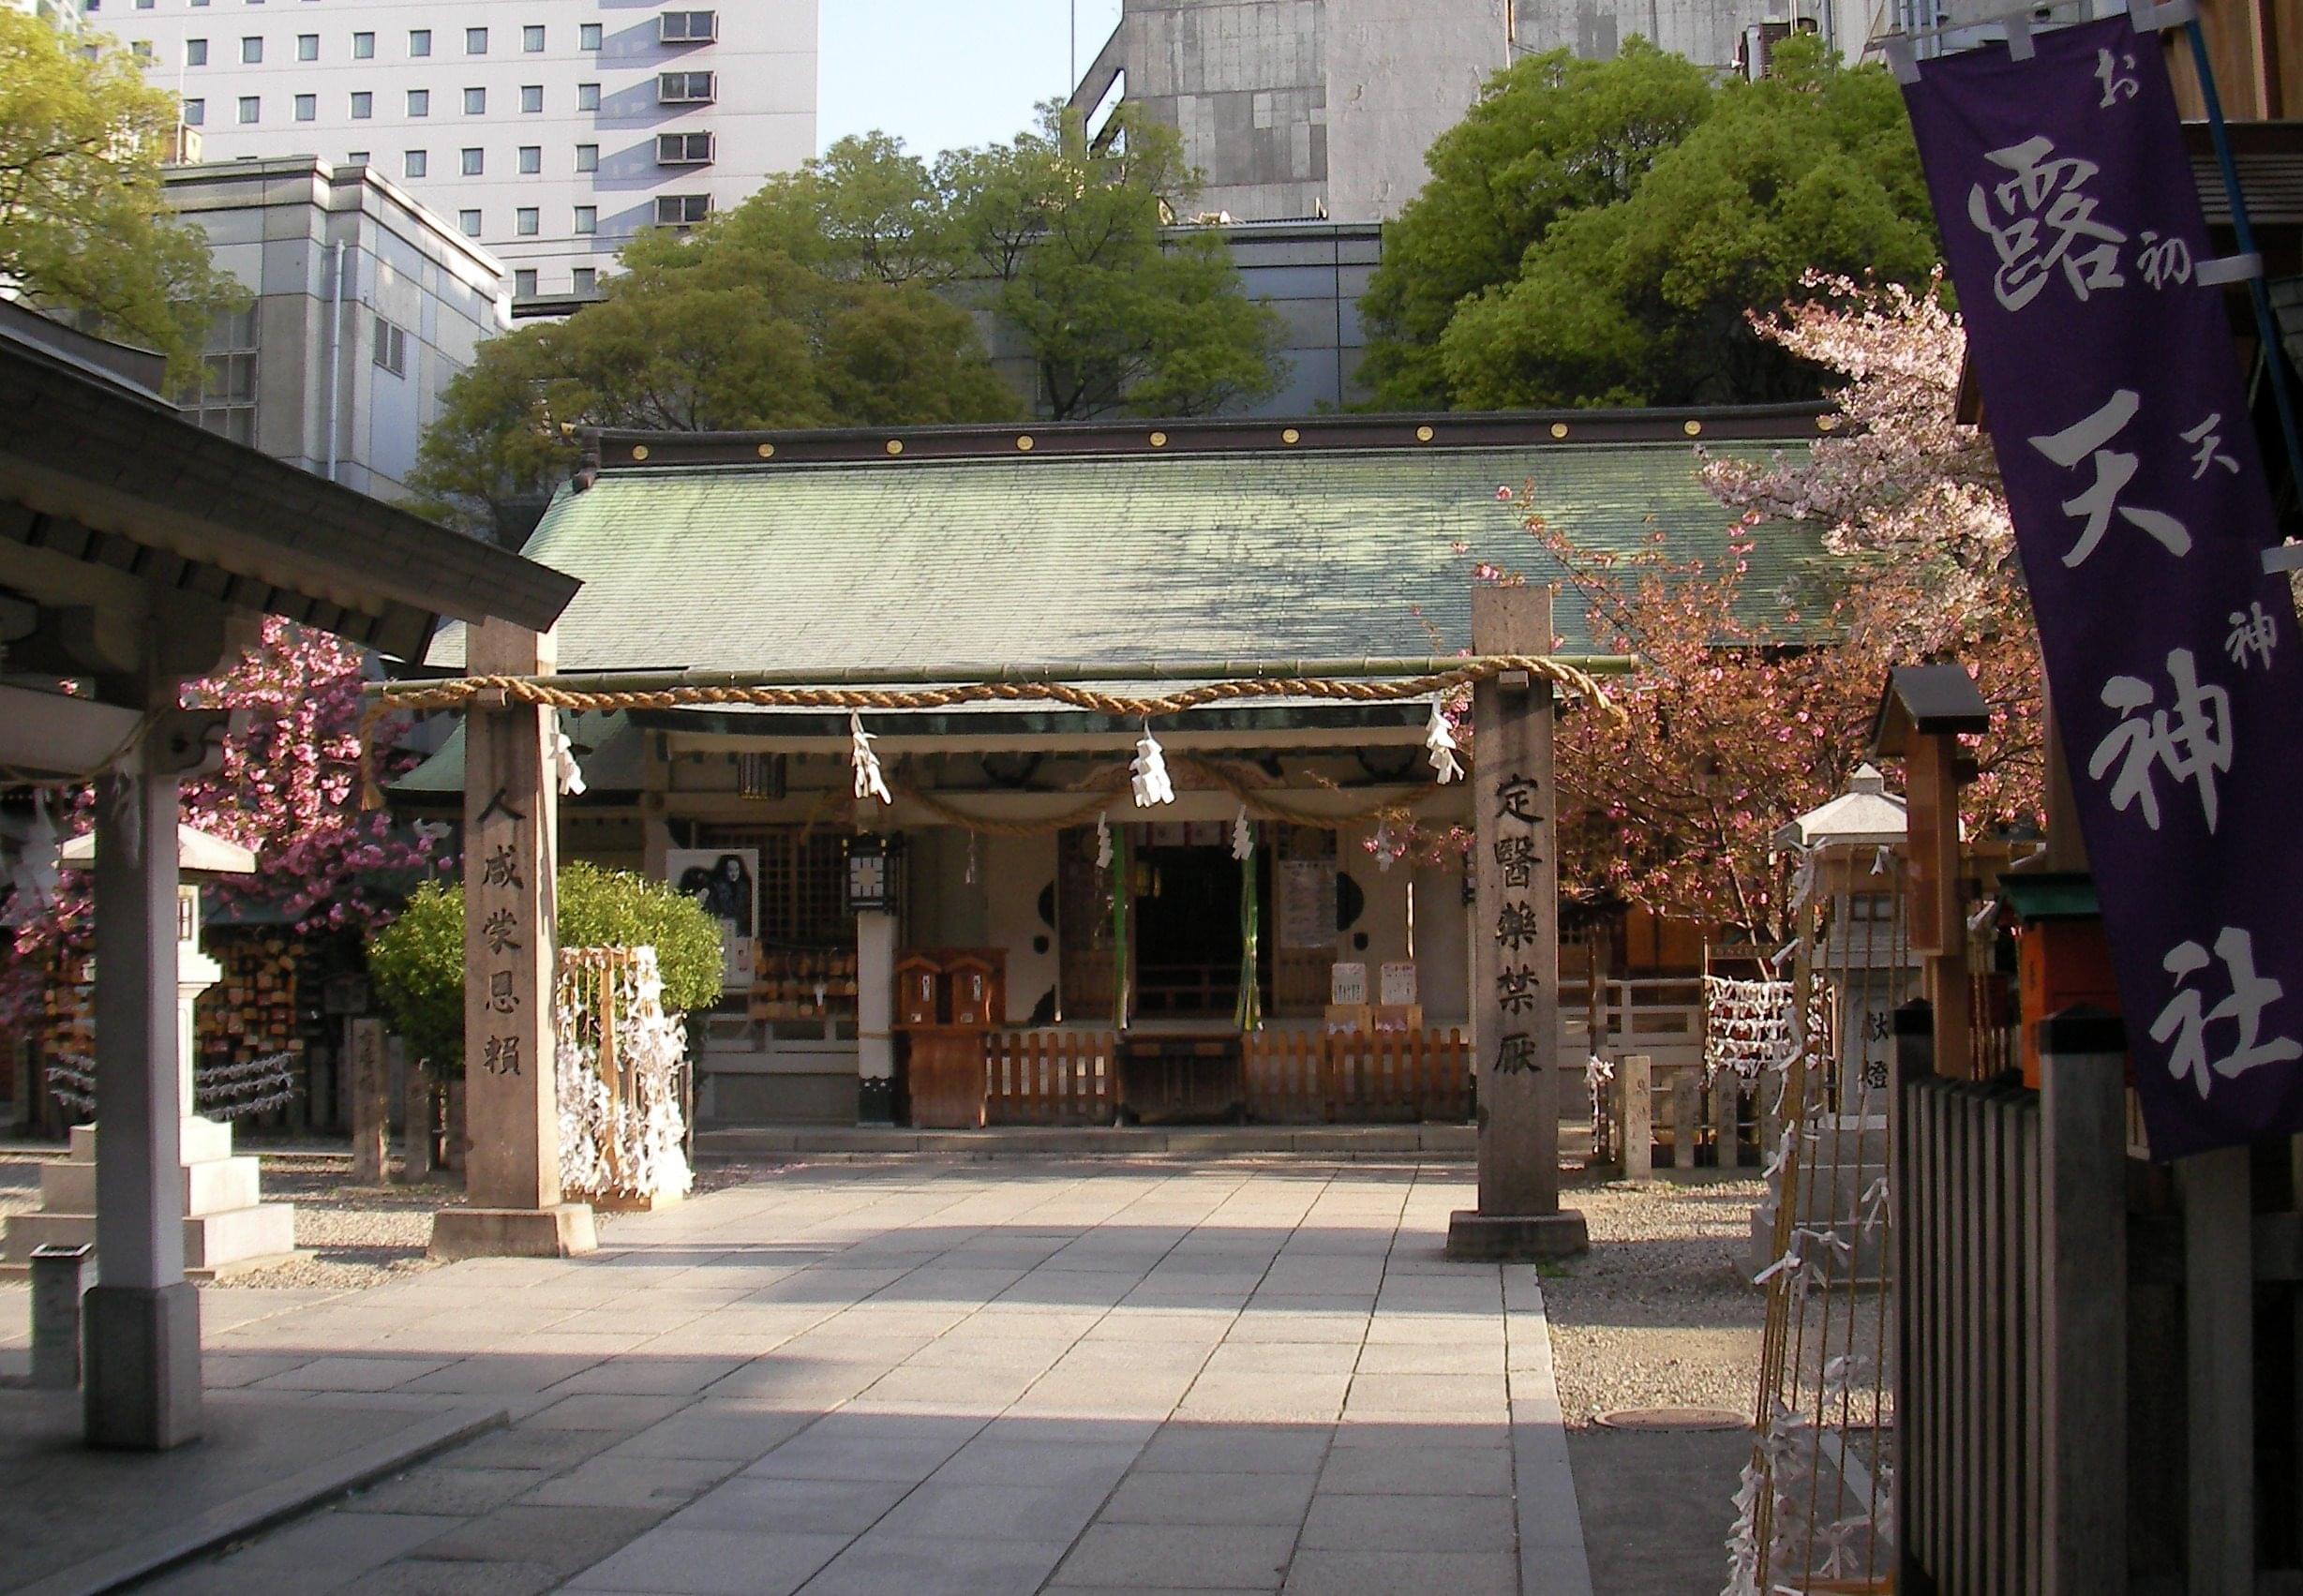 Witness the Tsuyuten Jinja Shrine